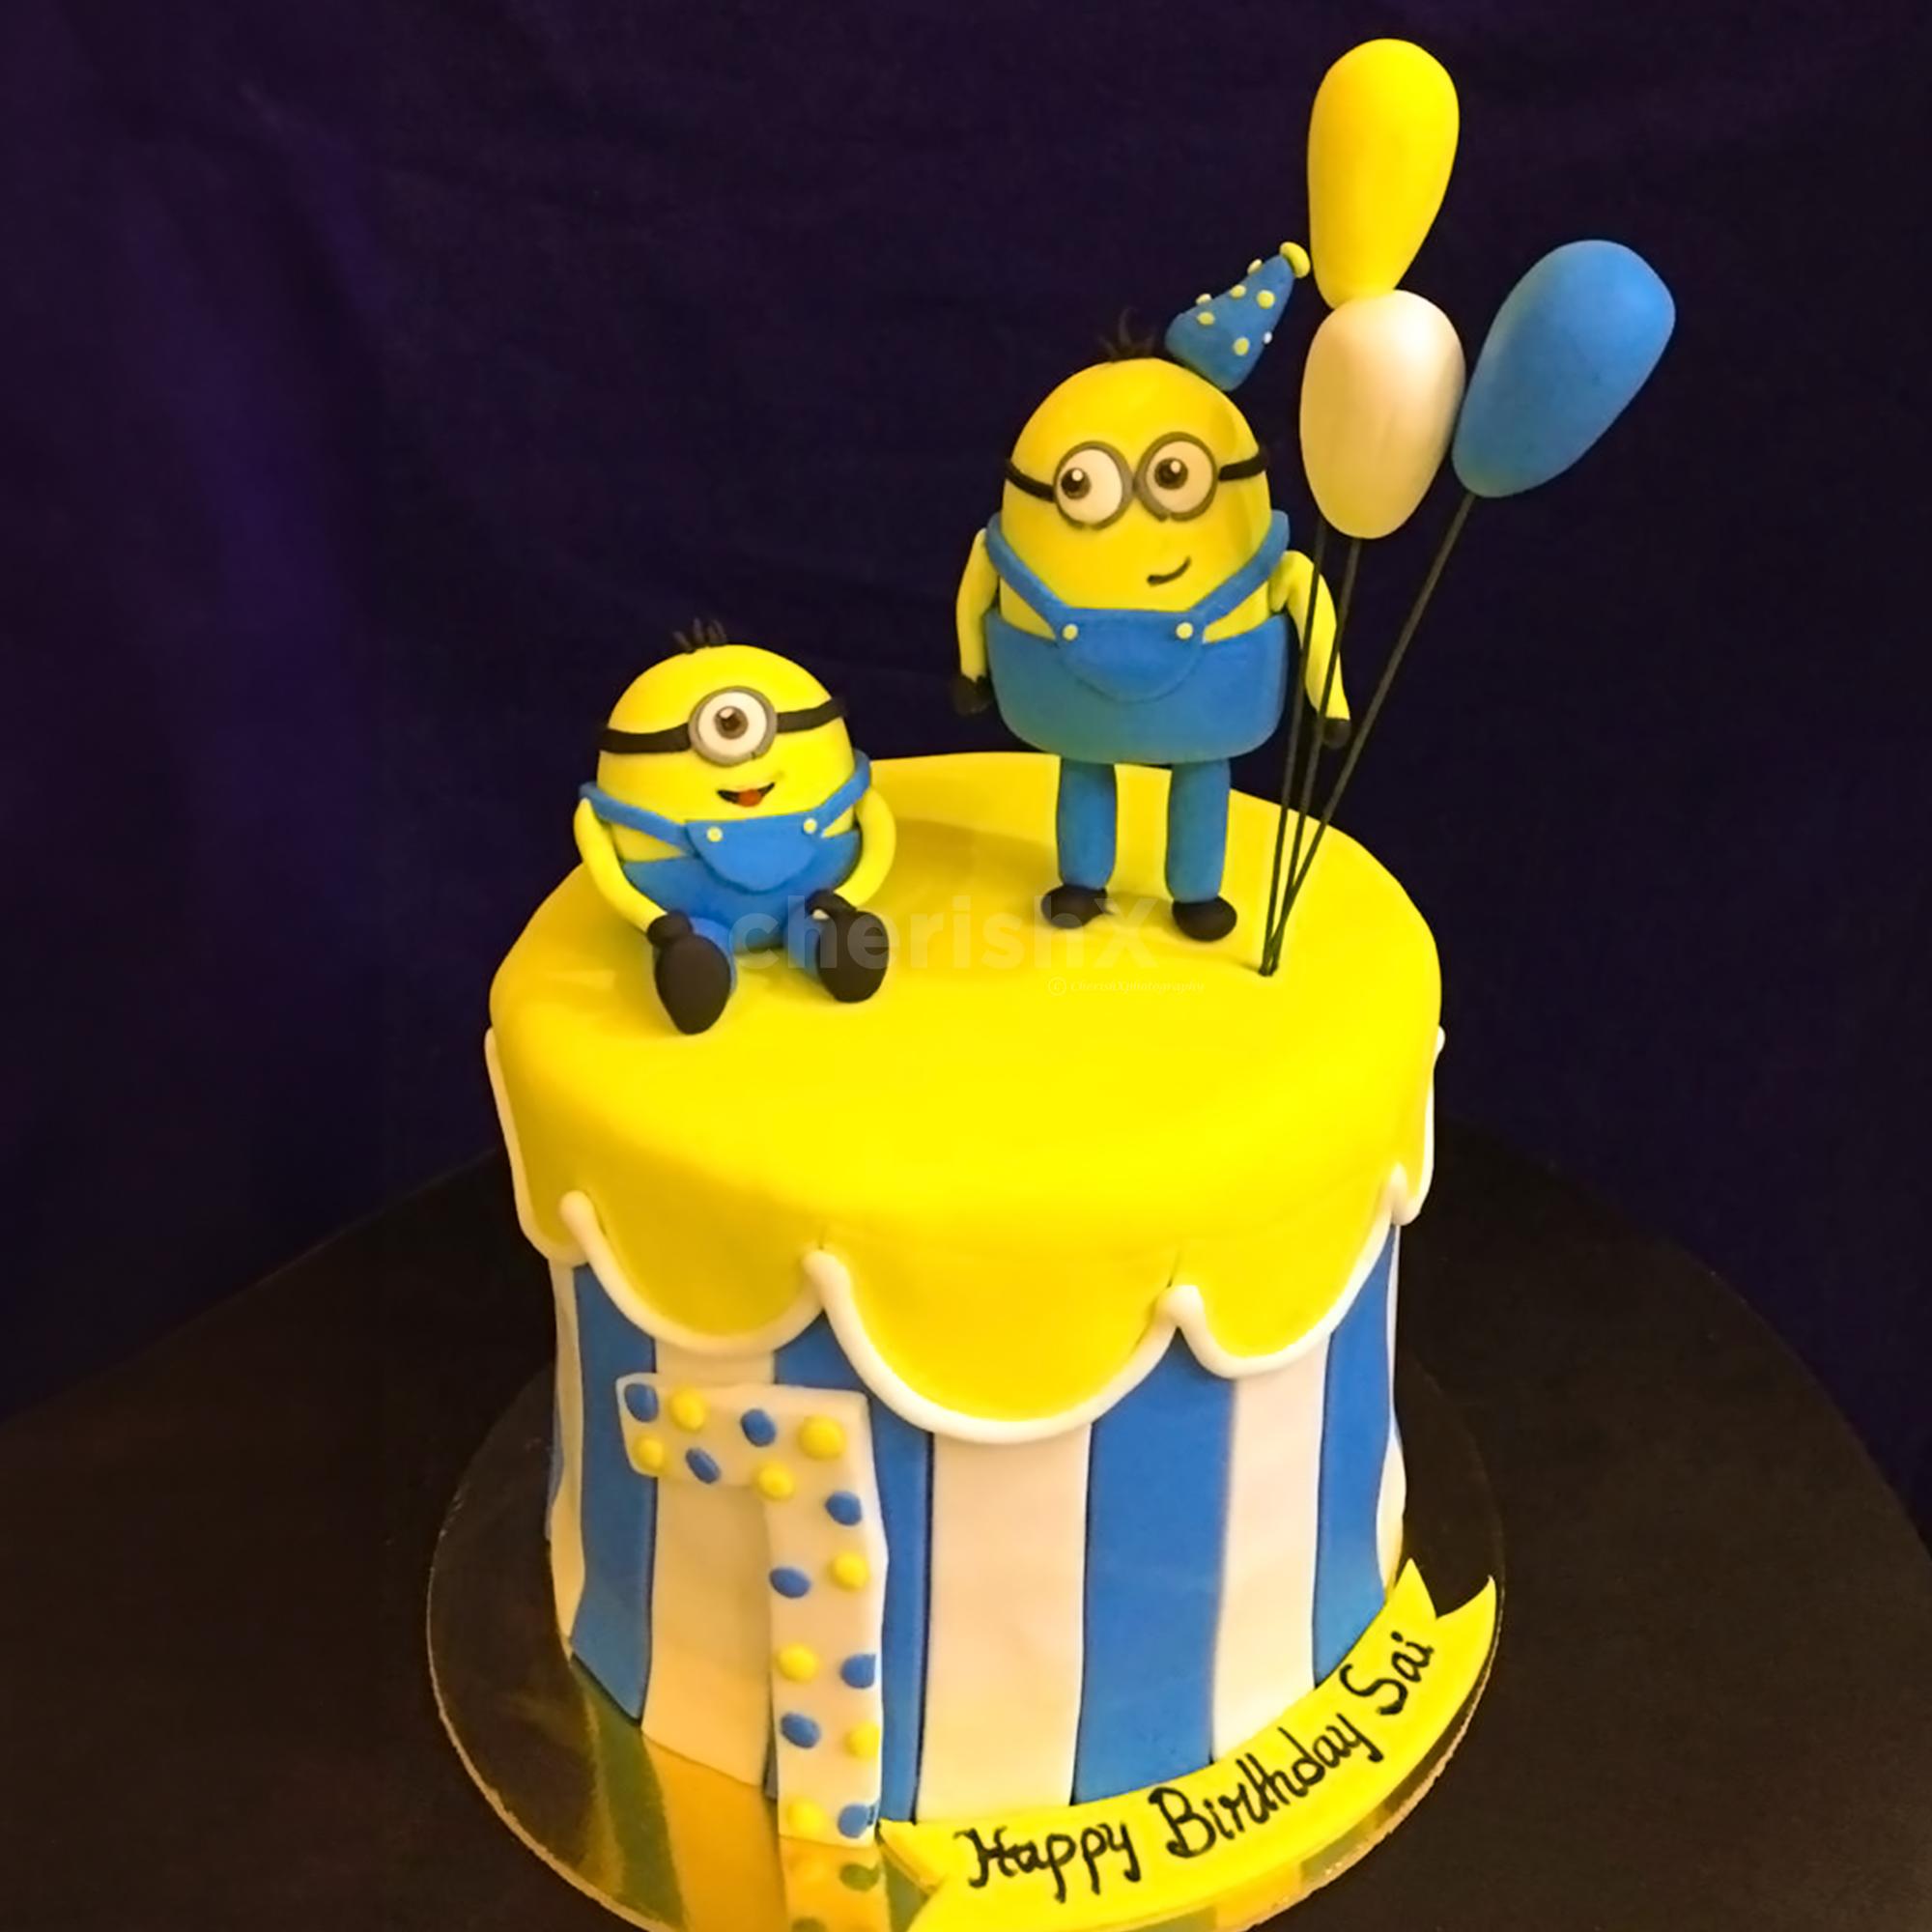 70 Cake Ideas for Birthday & Any Celebration : Light Blue Minion Cake